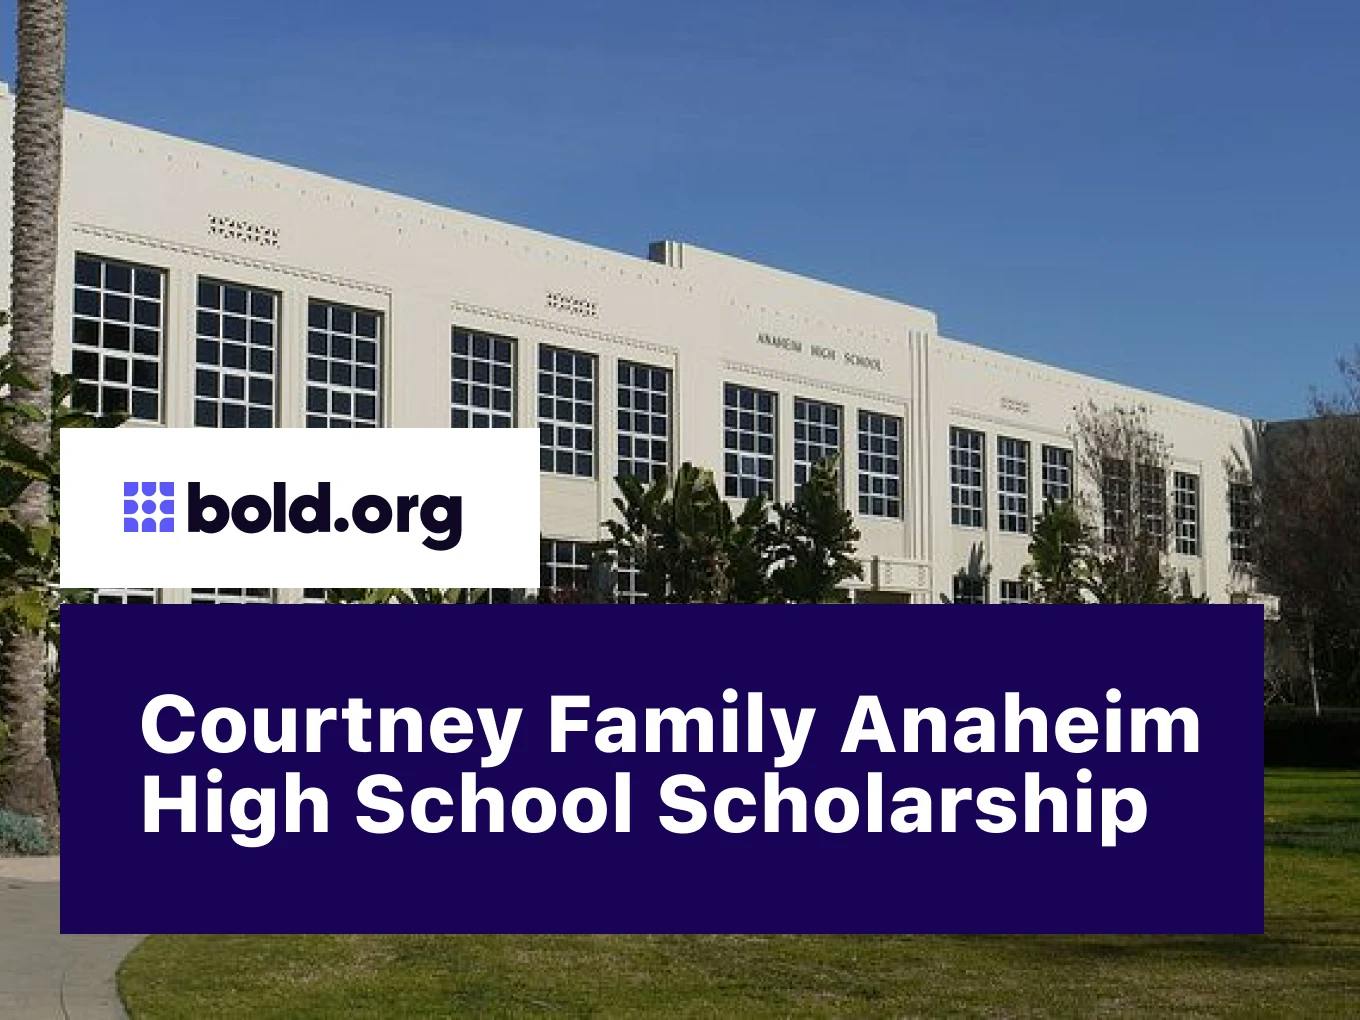 Courtney Family Anaheim High School Scholarship